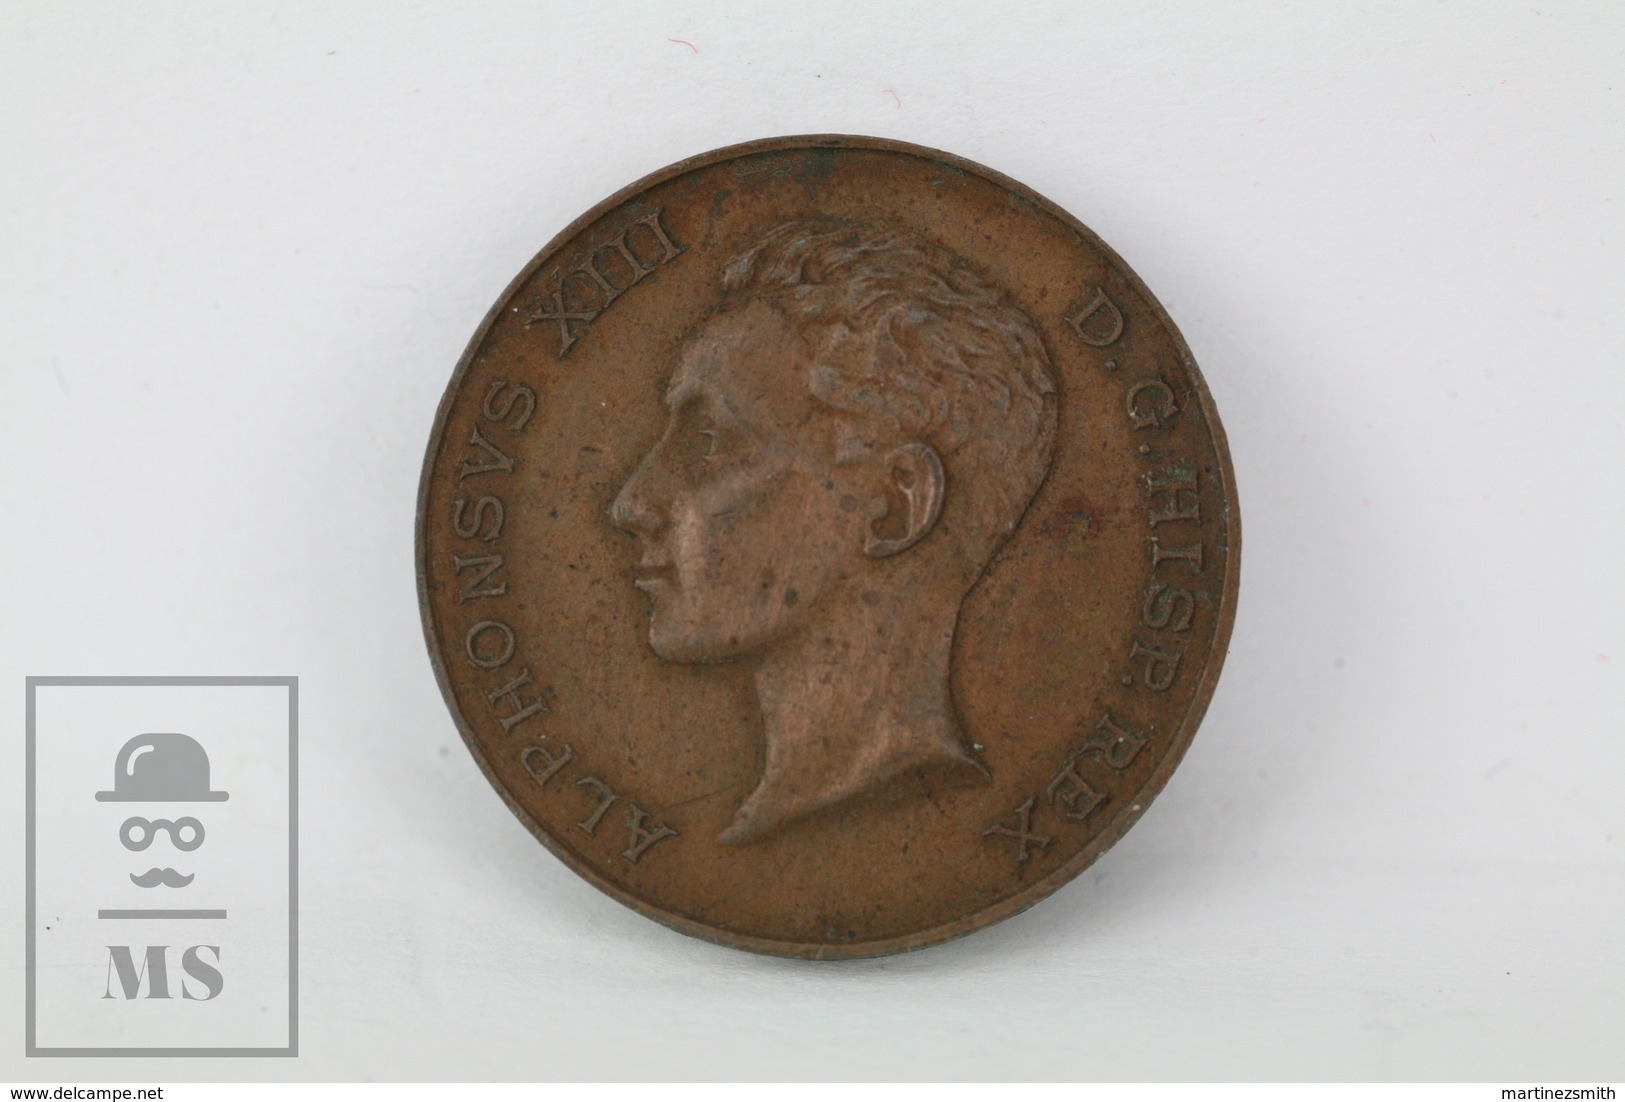 Alfonso XIII Commemorative Bronze Medal - Dated 17 May 1902 - Monarchia/ Nobiltà